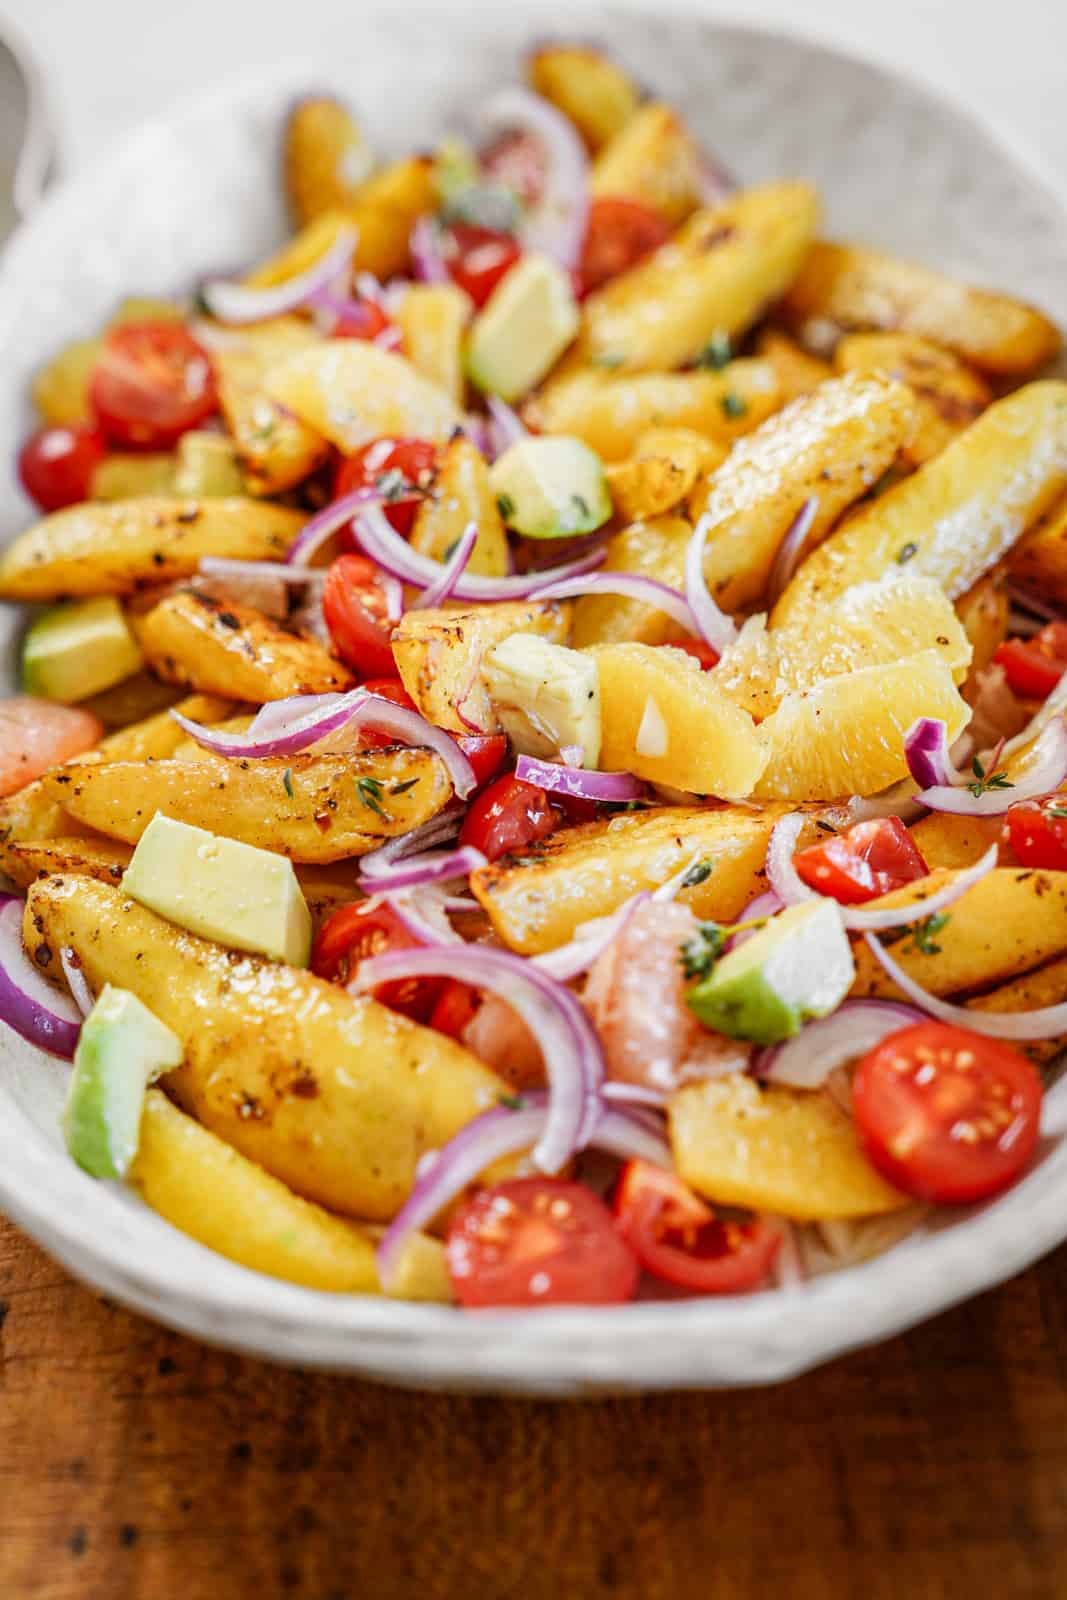 Big serving dish of vegan roasted potato salad with fresh veggies and citrus flavor.